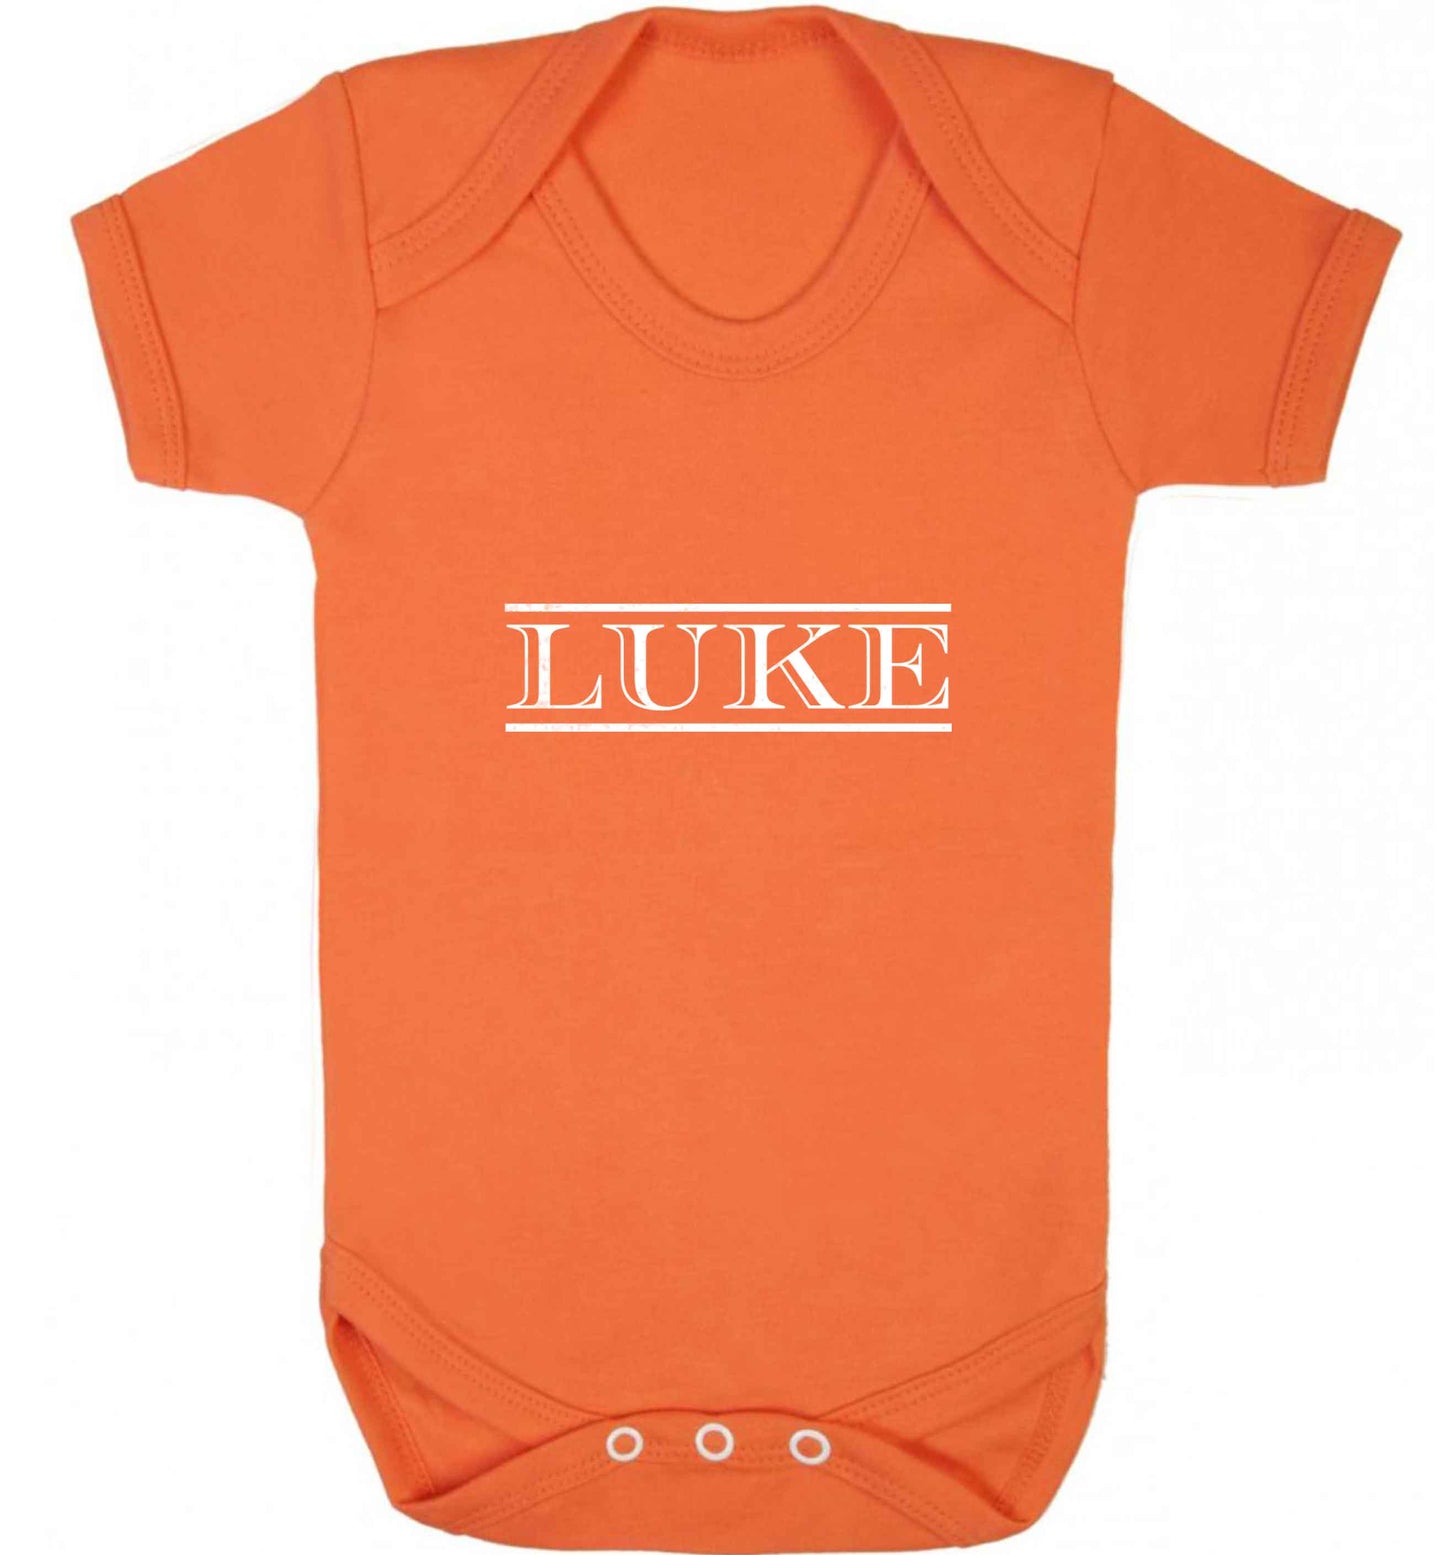 Personalised name baby vest orange 18-24 months